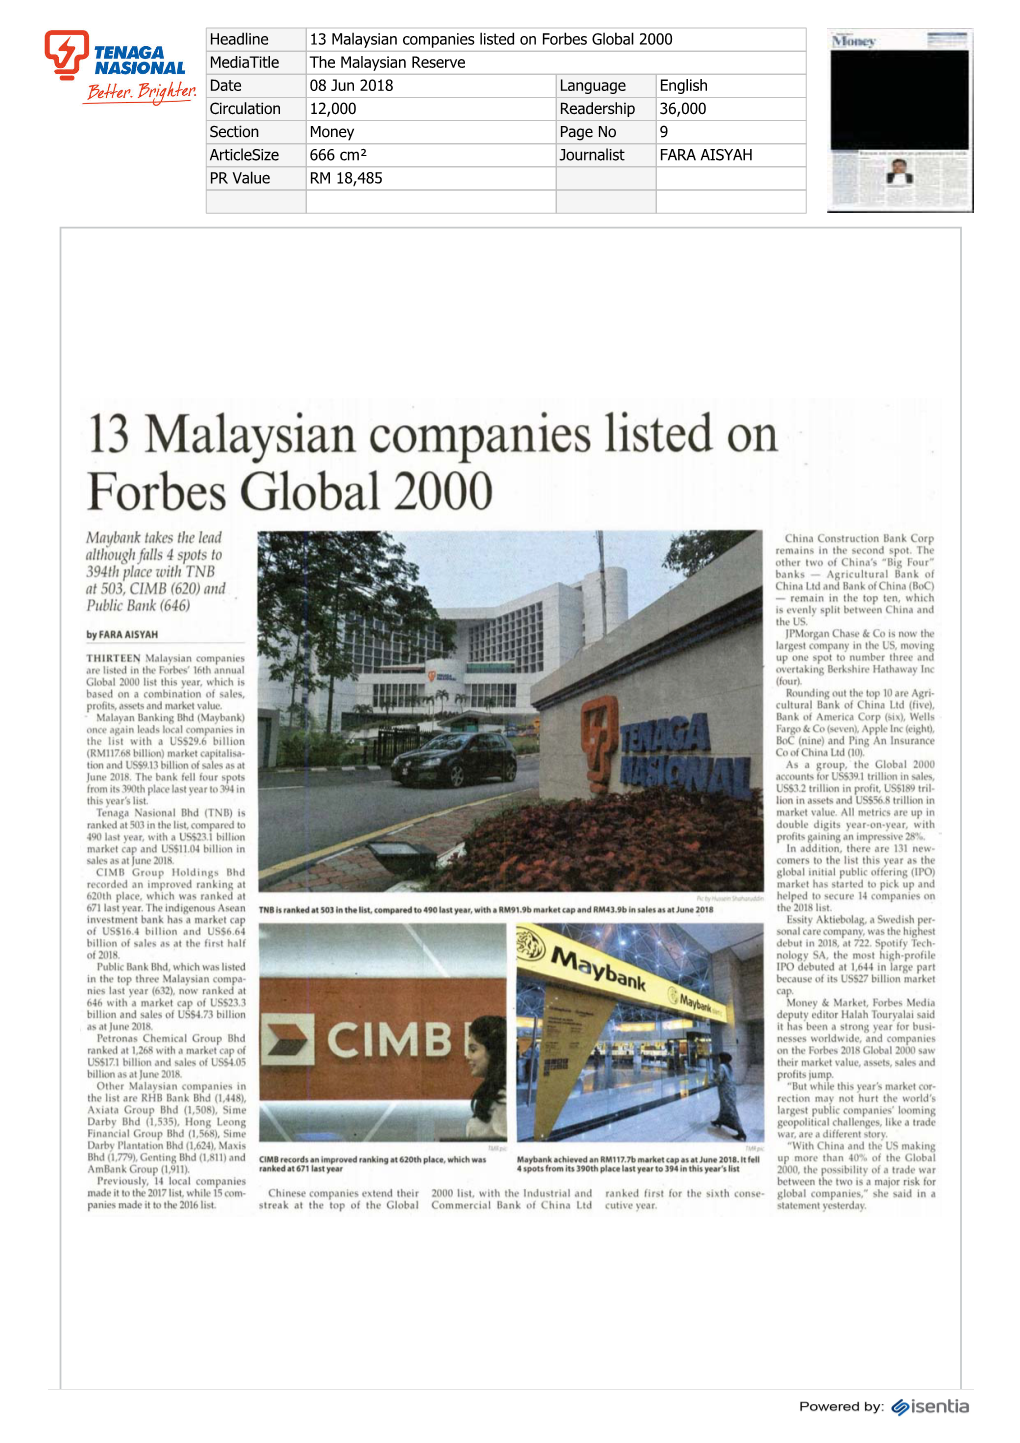 13 Malaysian Companies Listed on Forbes Global 2000